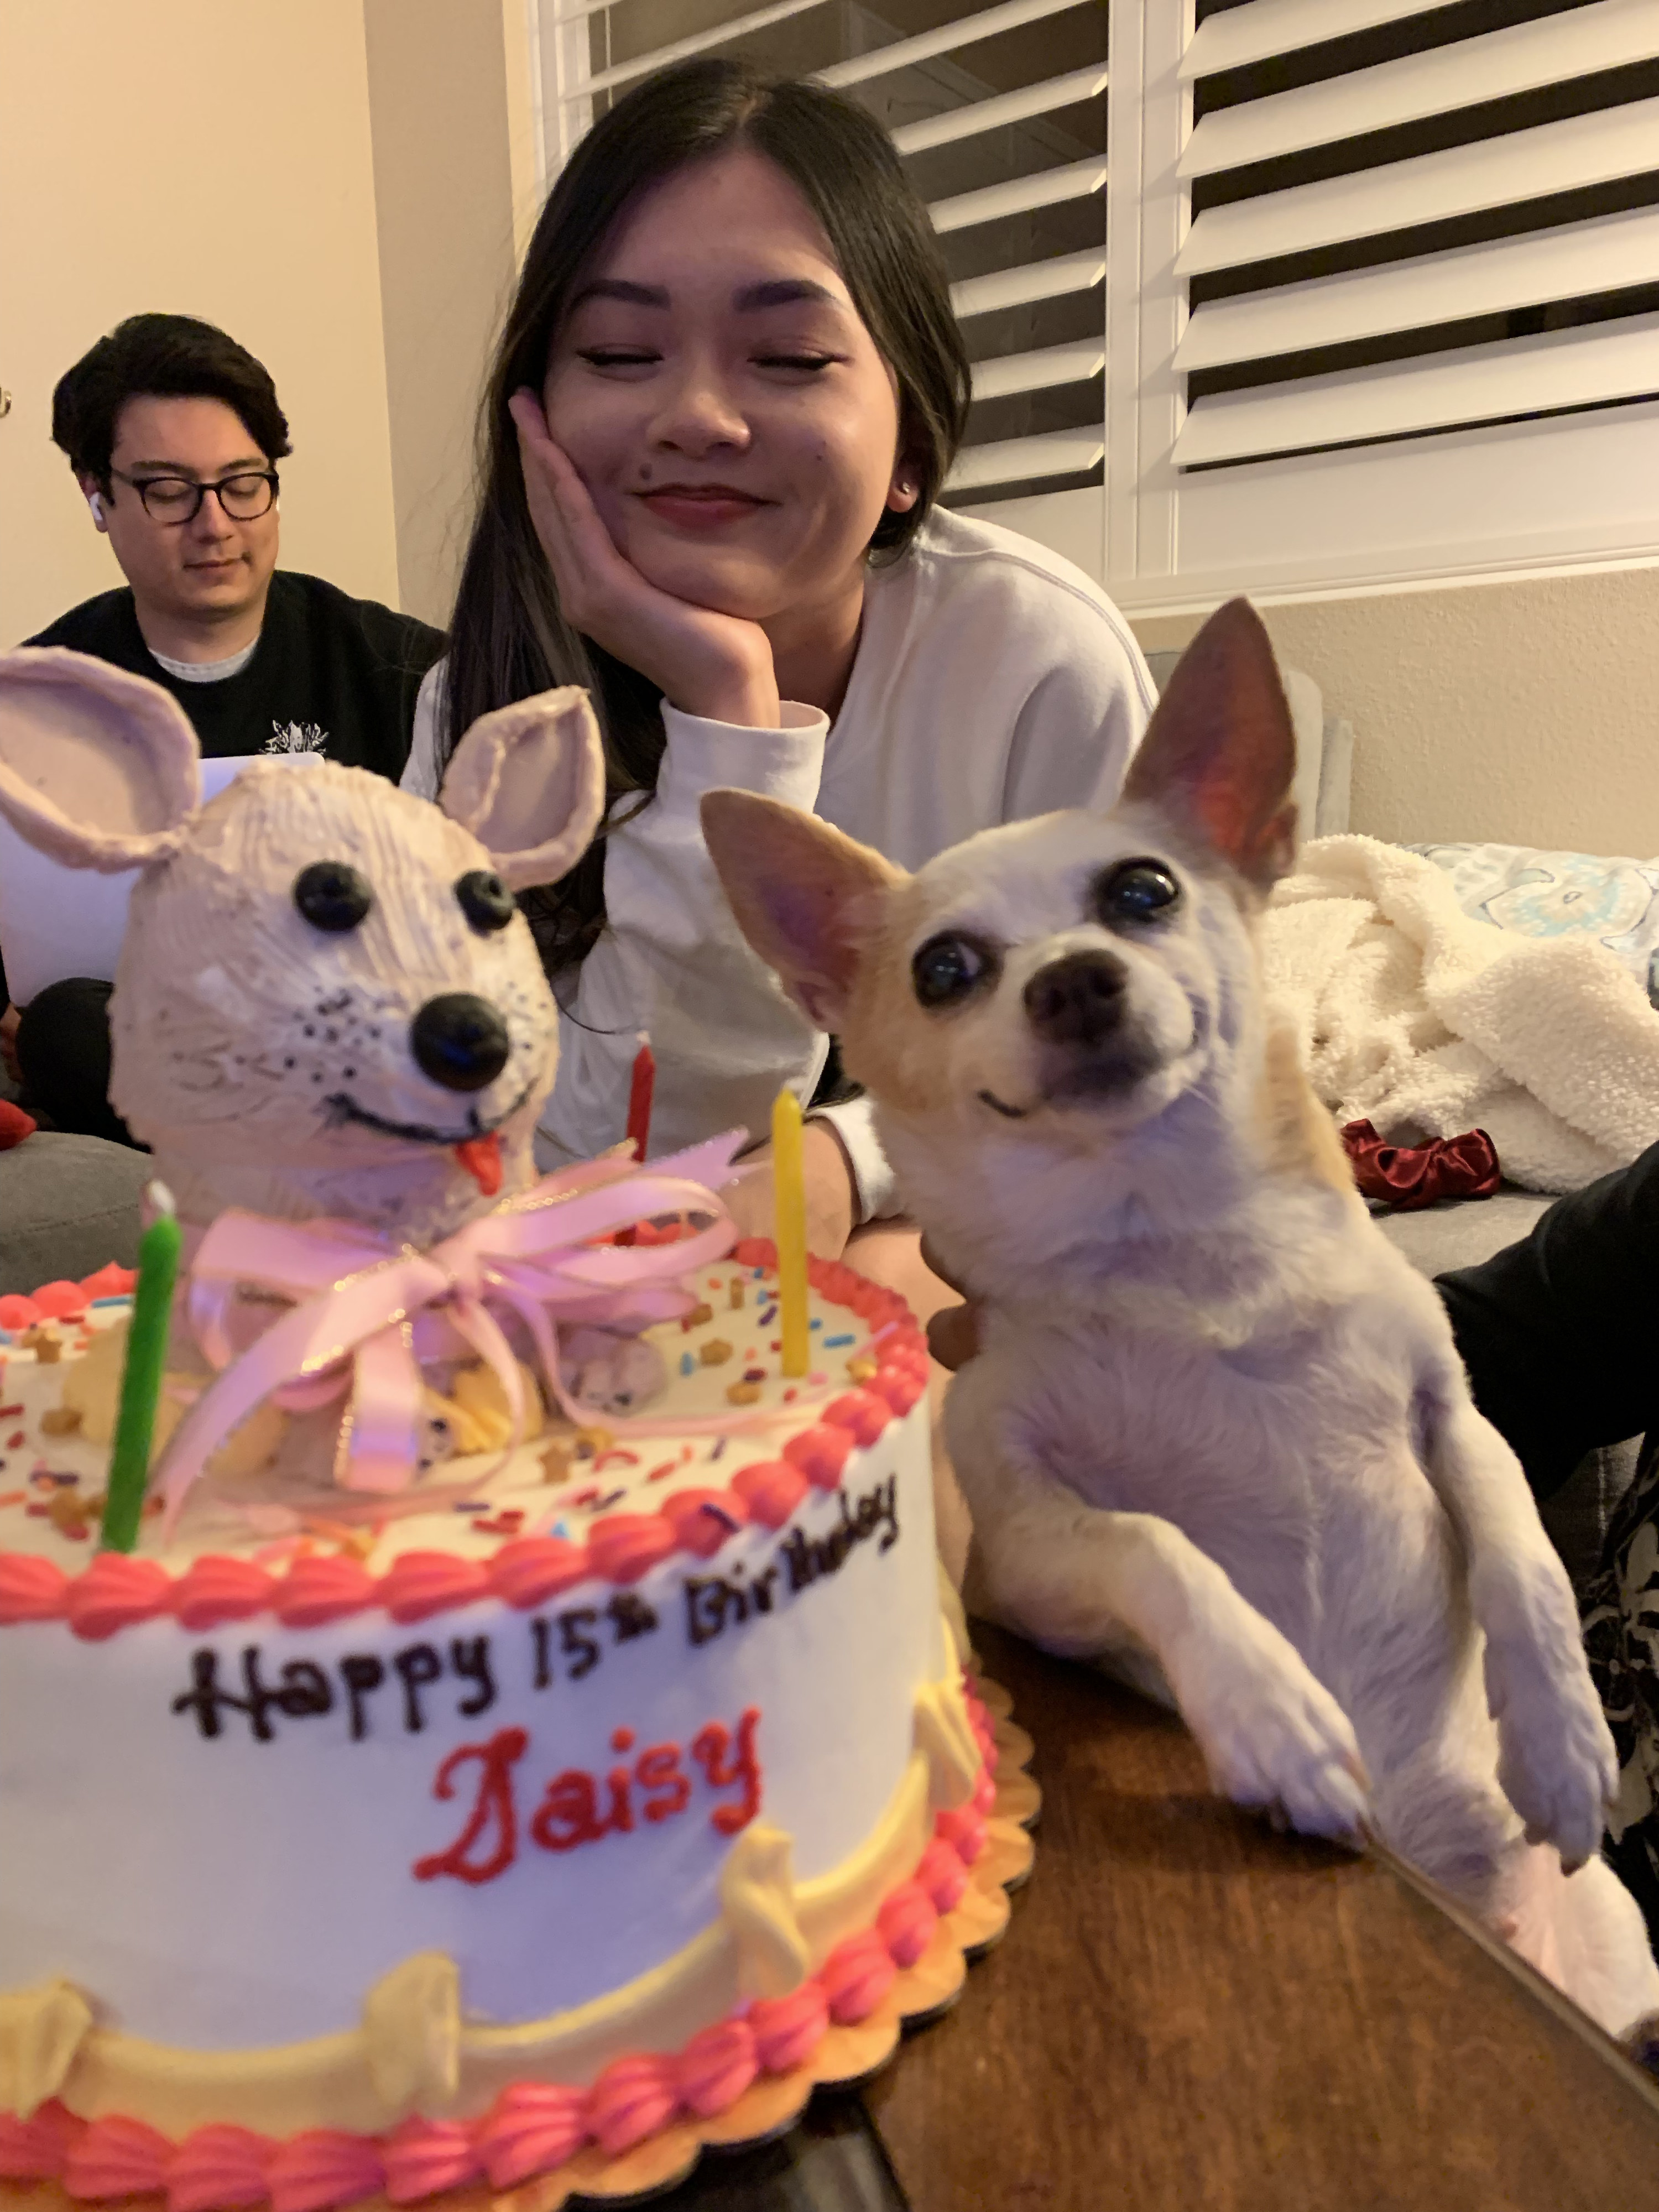 Daisy next to her birthday cake